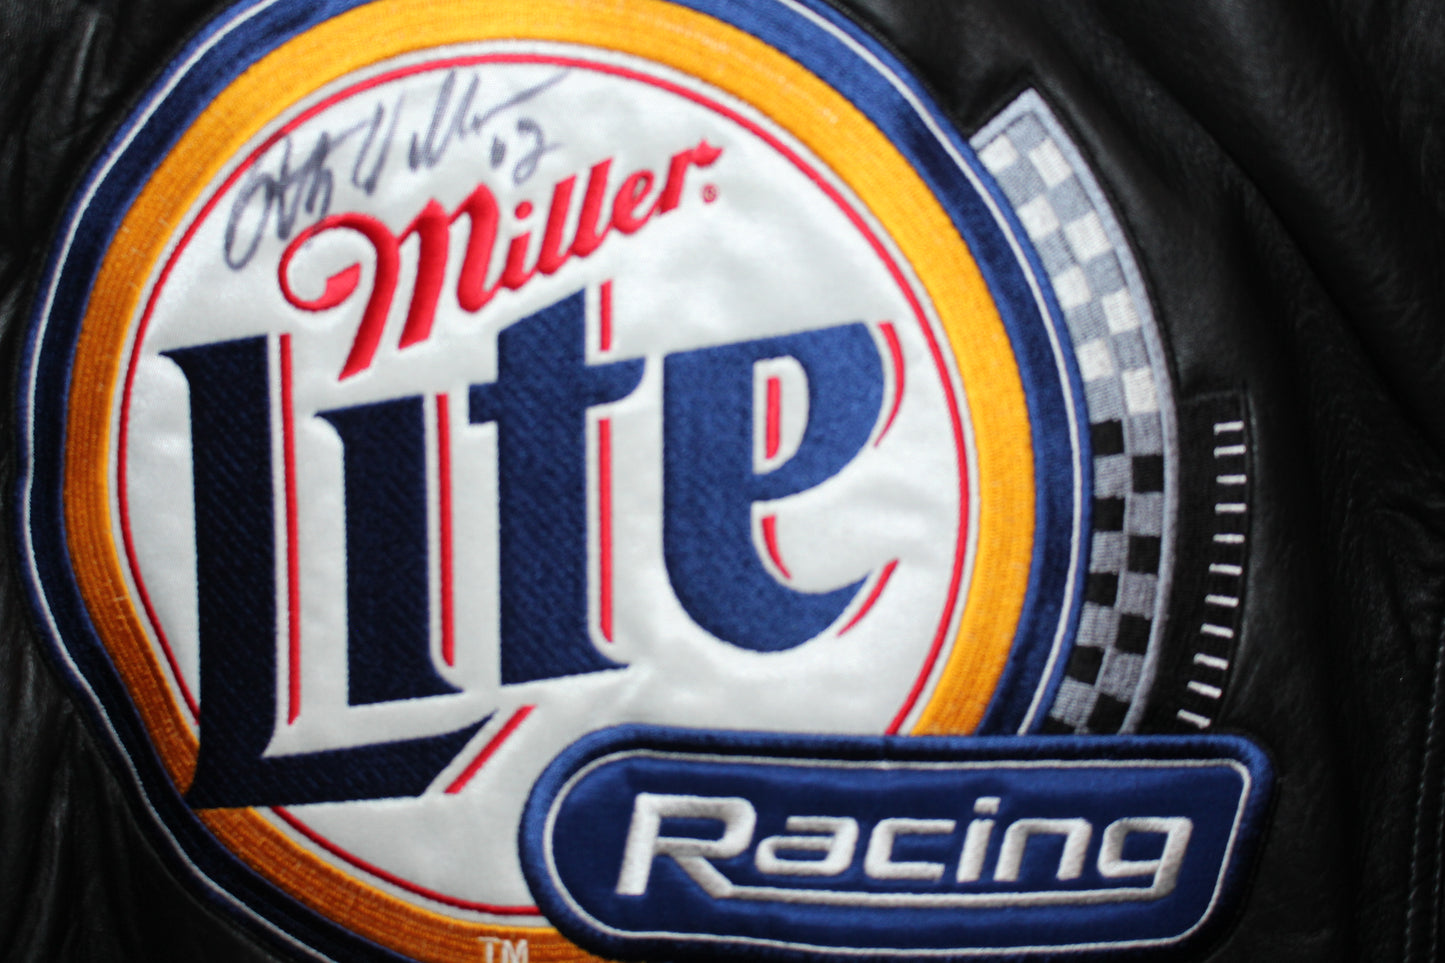 Rare Miller Lite Racing NASCAR Rusty Wallace #2 Leather Jacket (XL)